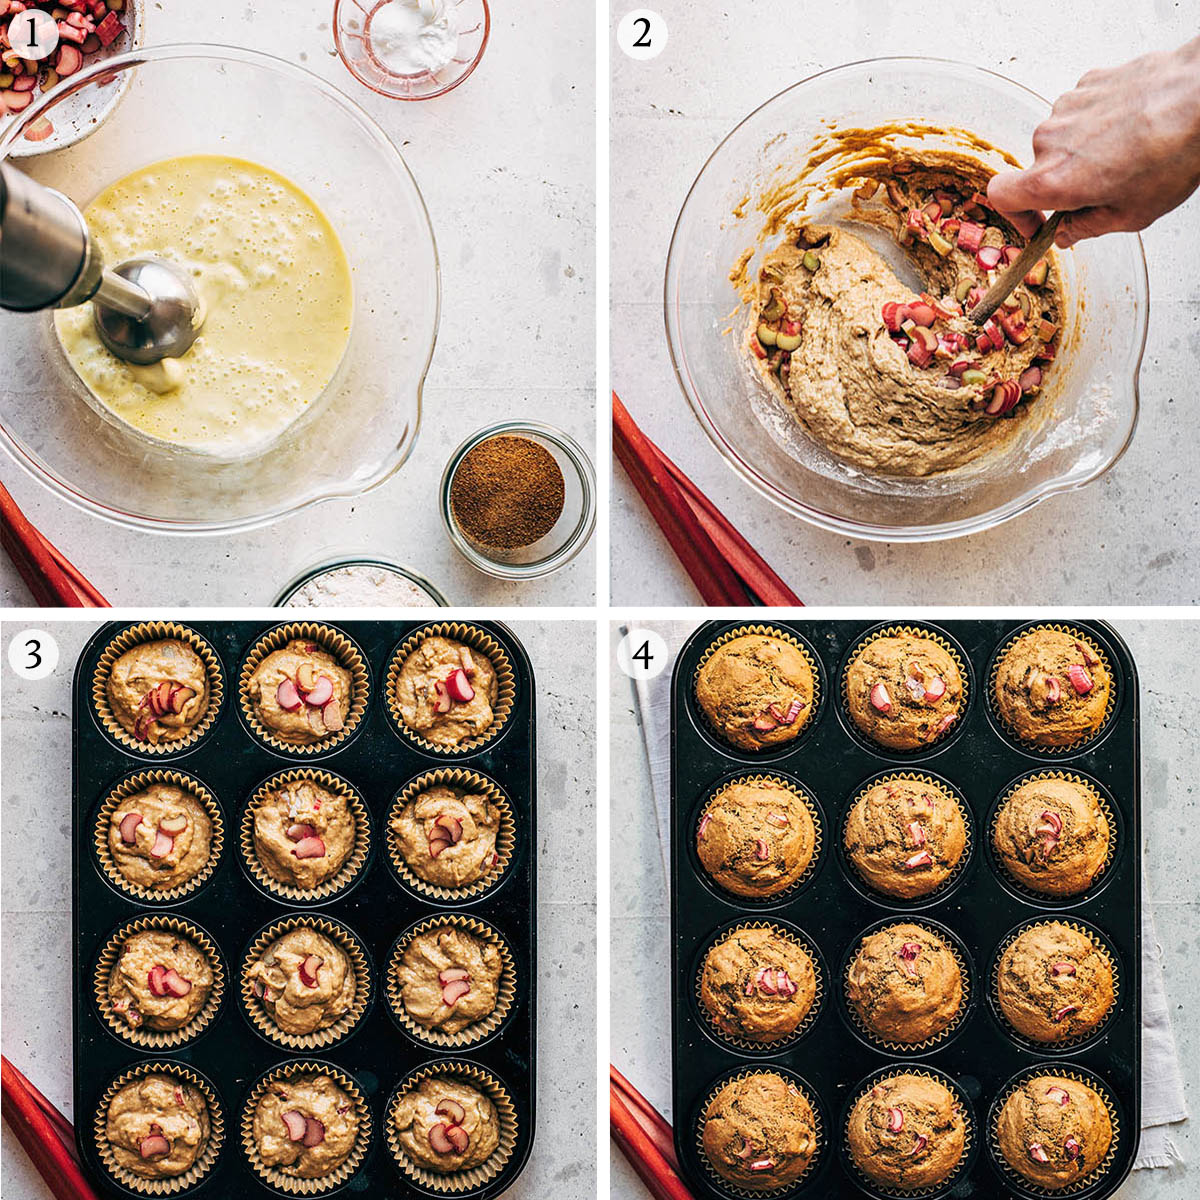 Rhubarb muffins steps 1 to 4.